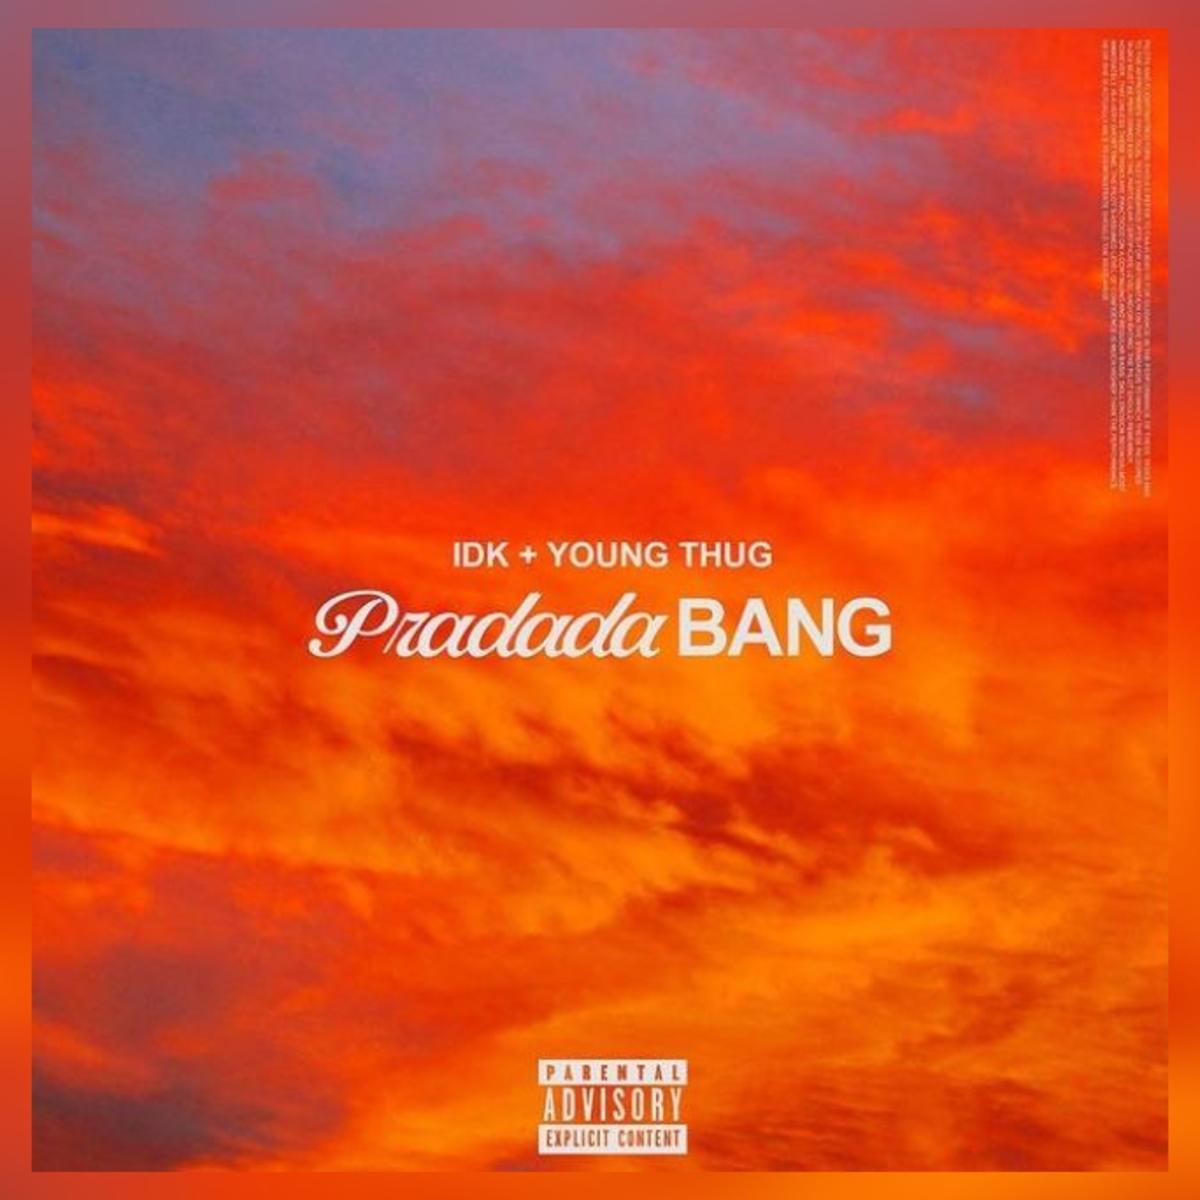 IDK & Young Thug Unite For “PradadaBang”